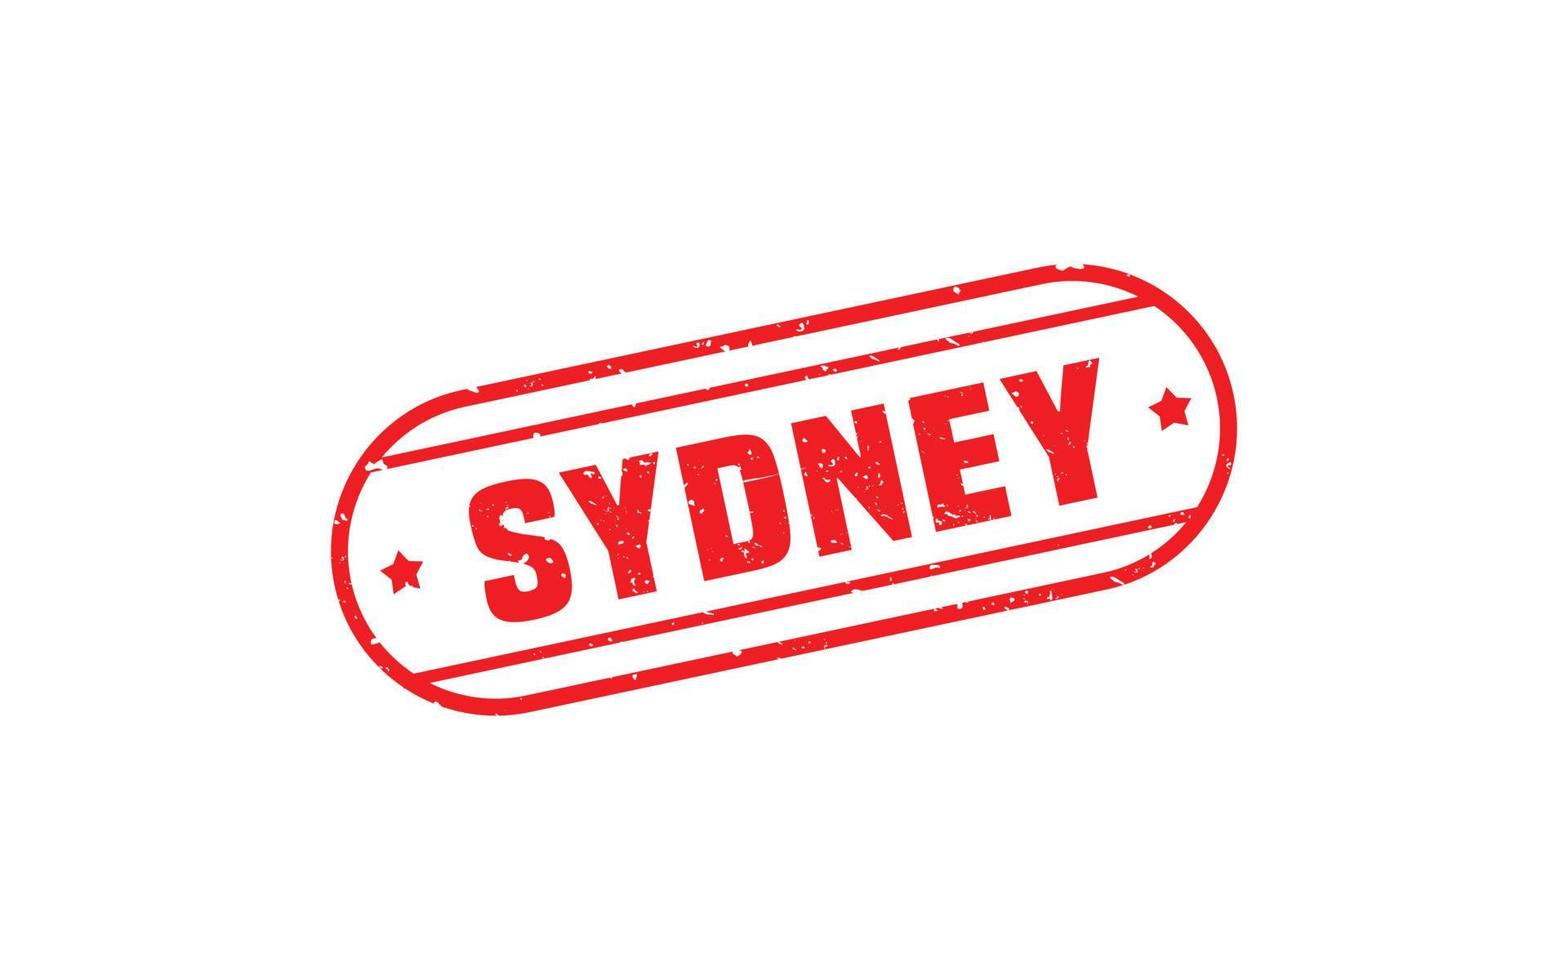 carimbo de borracha sydney austrália com estilo grunge em fundo branco vetor